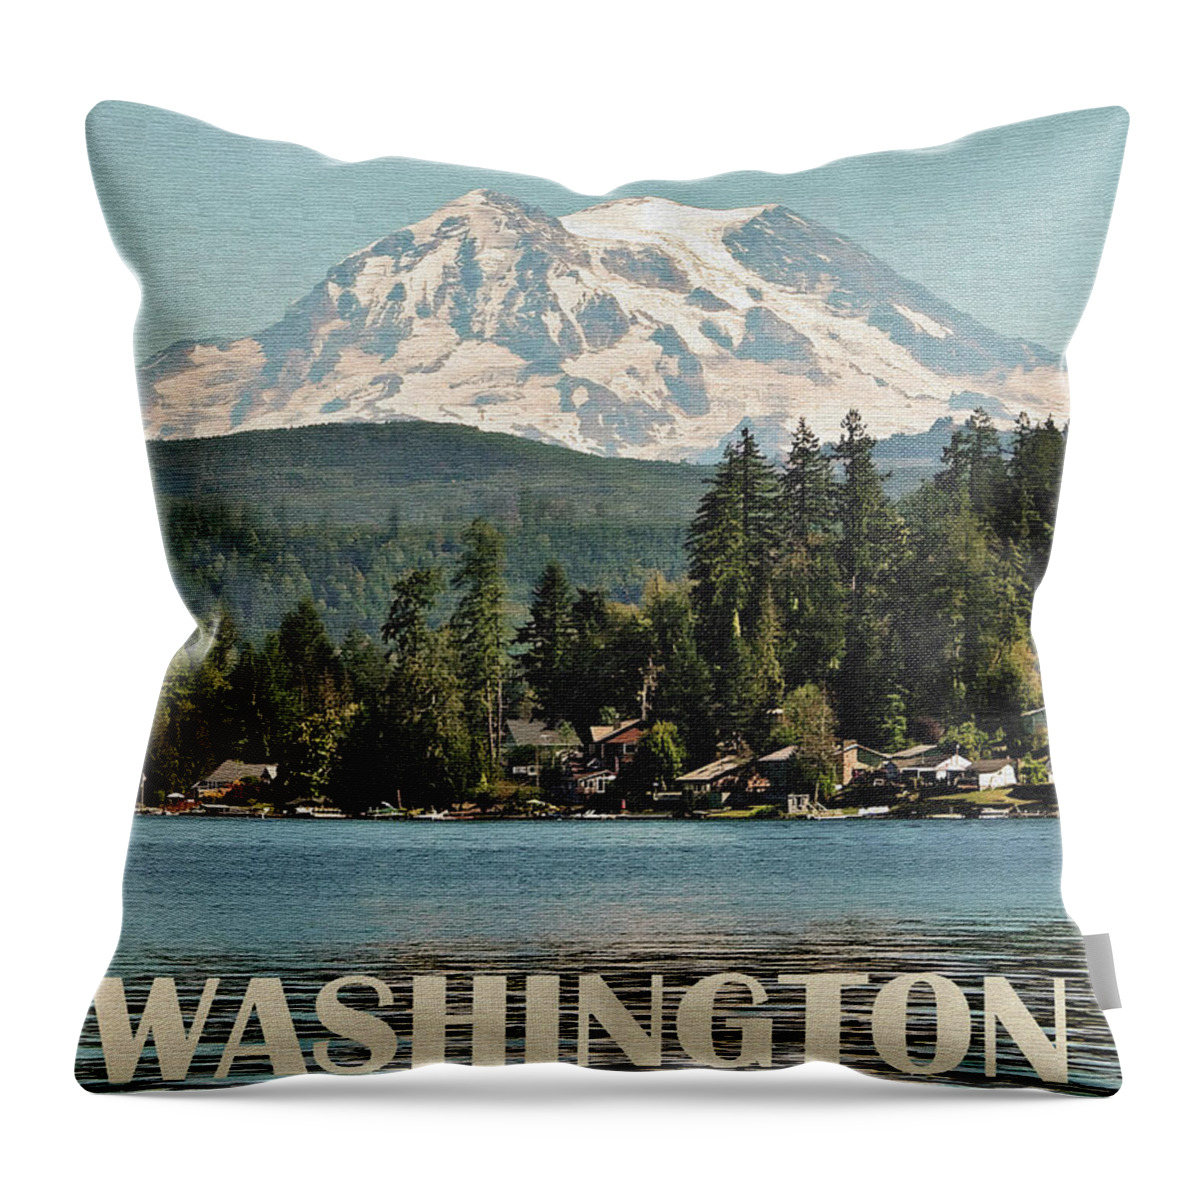  Washington Throw Pillow featuring the photograph Washington, Mount Rainer by Long Shot